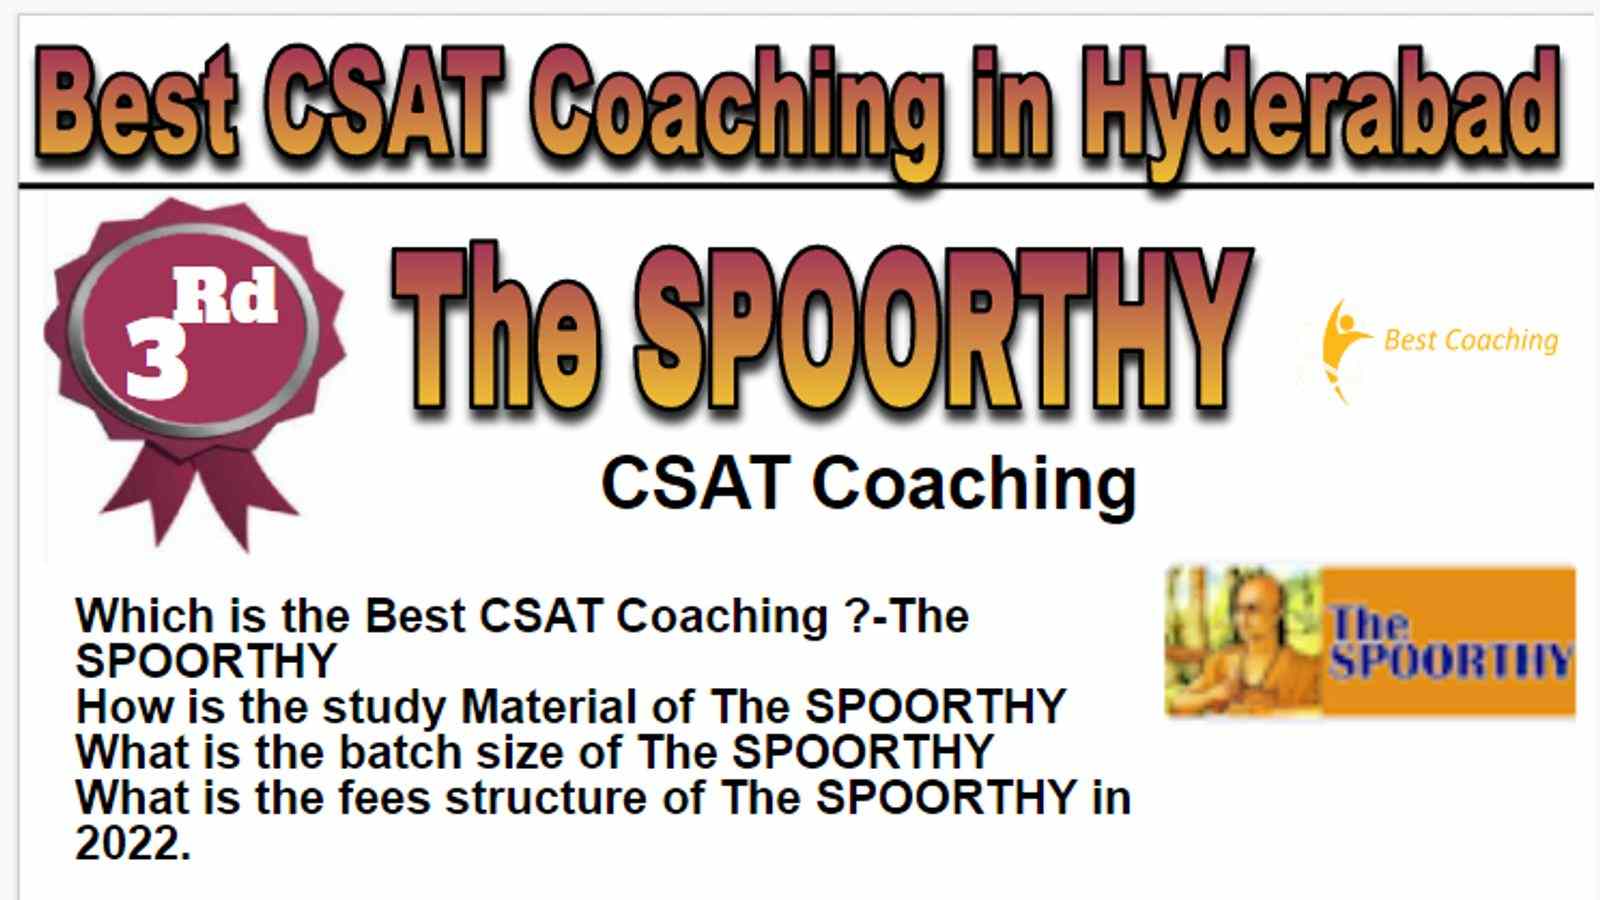 Rank 3 Best CSAT Coaching In Hyderabad